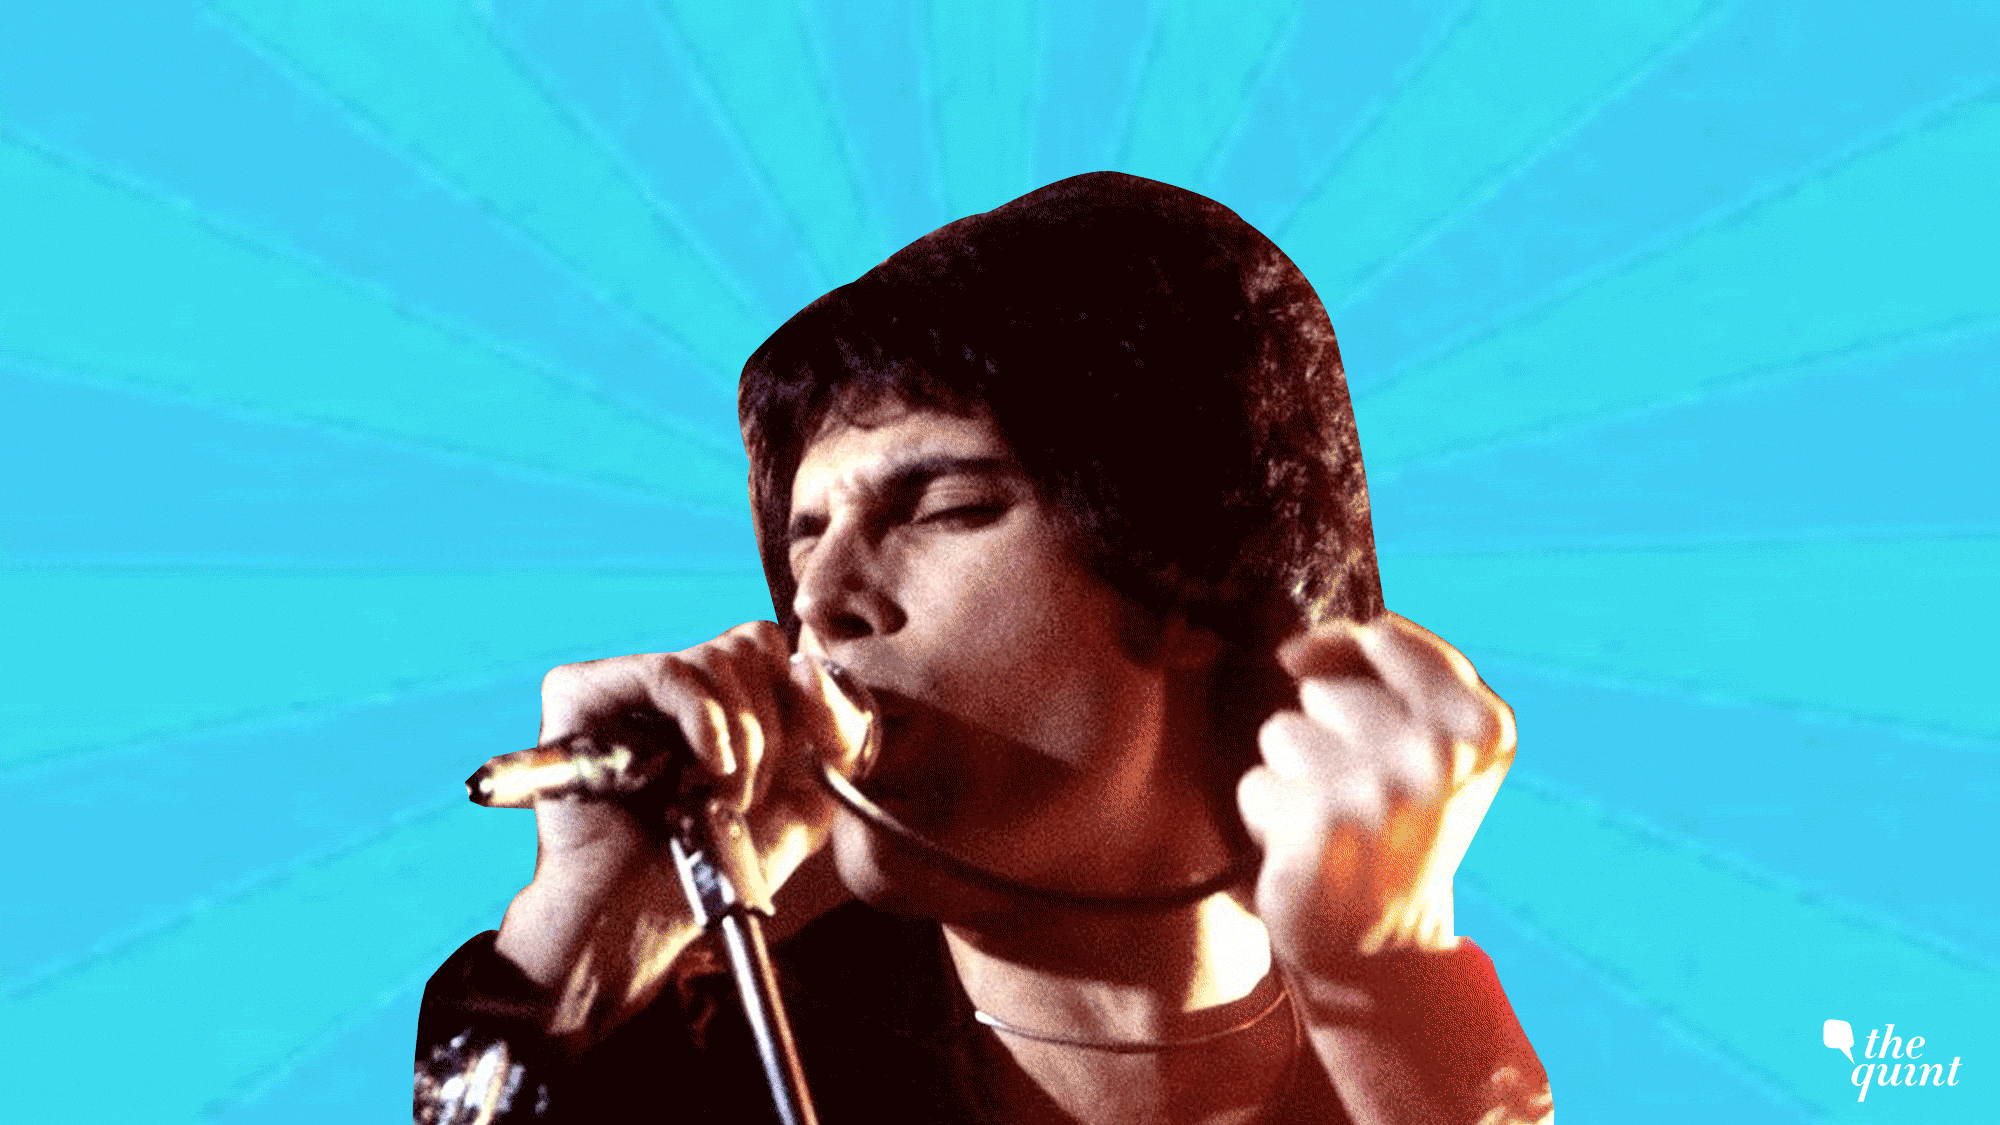 Image of Freddie Mercury, on whose life <i>Bohemian Rhapsody</i>&nbsp;is based, used for representational purposes.